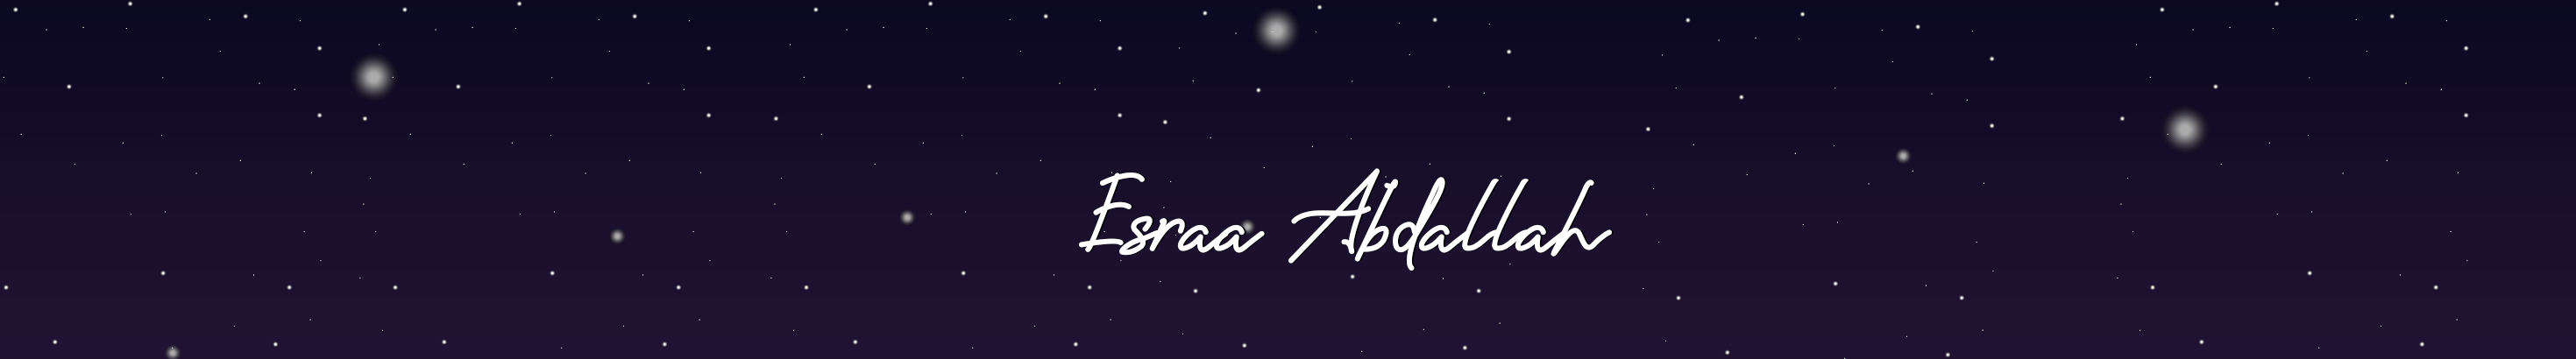 Баннер профиля Esraa abdallah